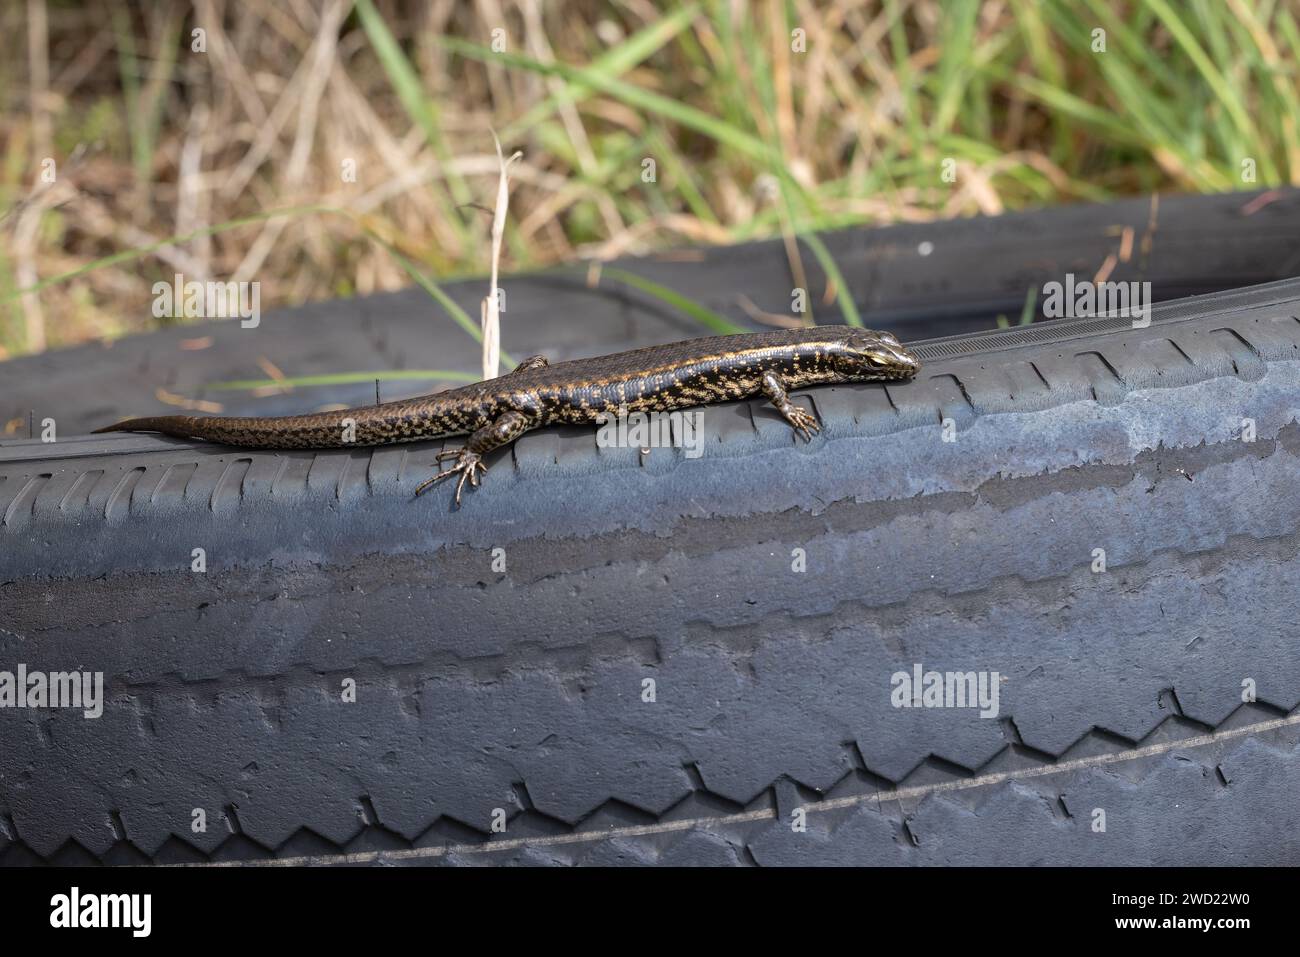 Australian Eastern Water Skink basking on old car tyre Stock Photo